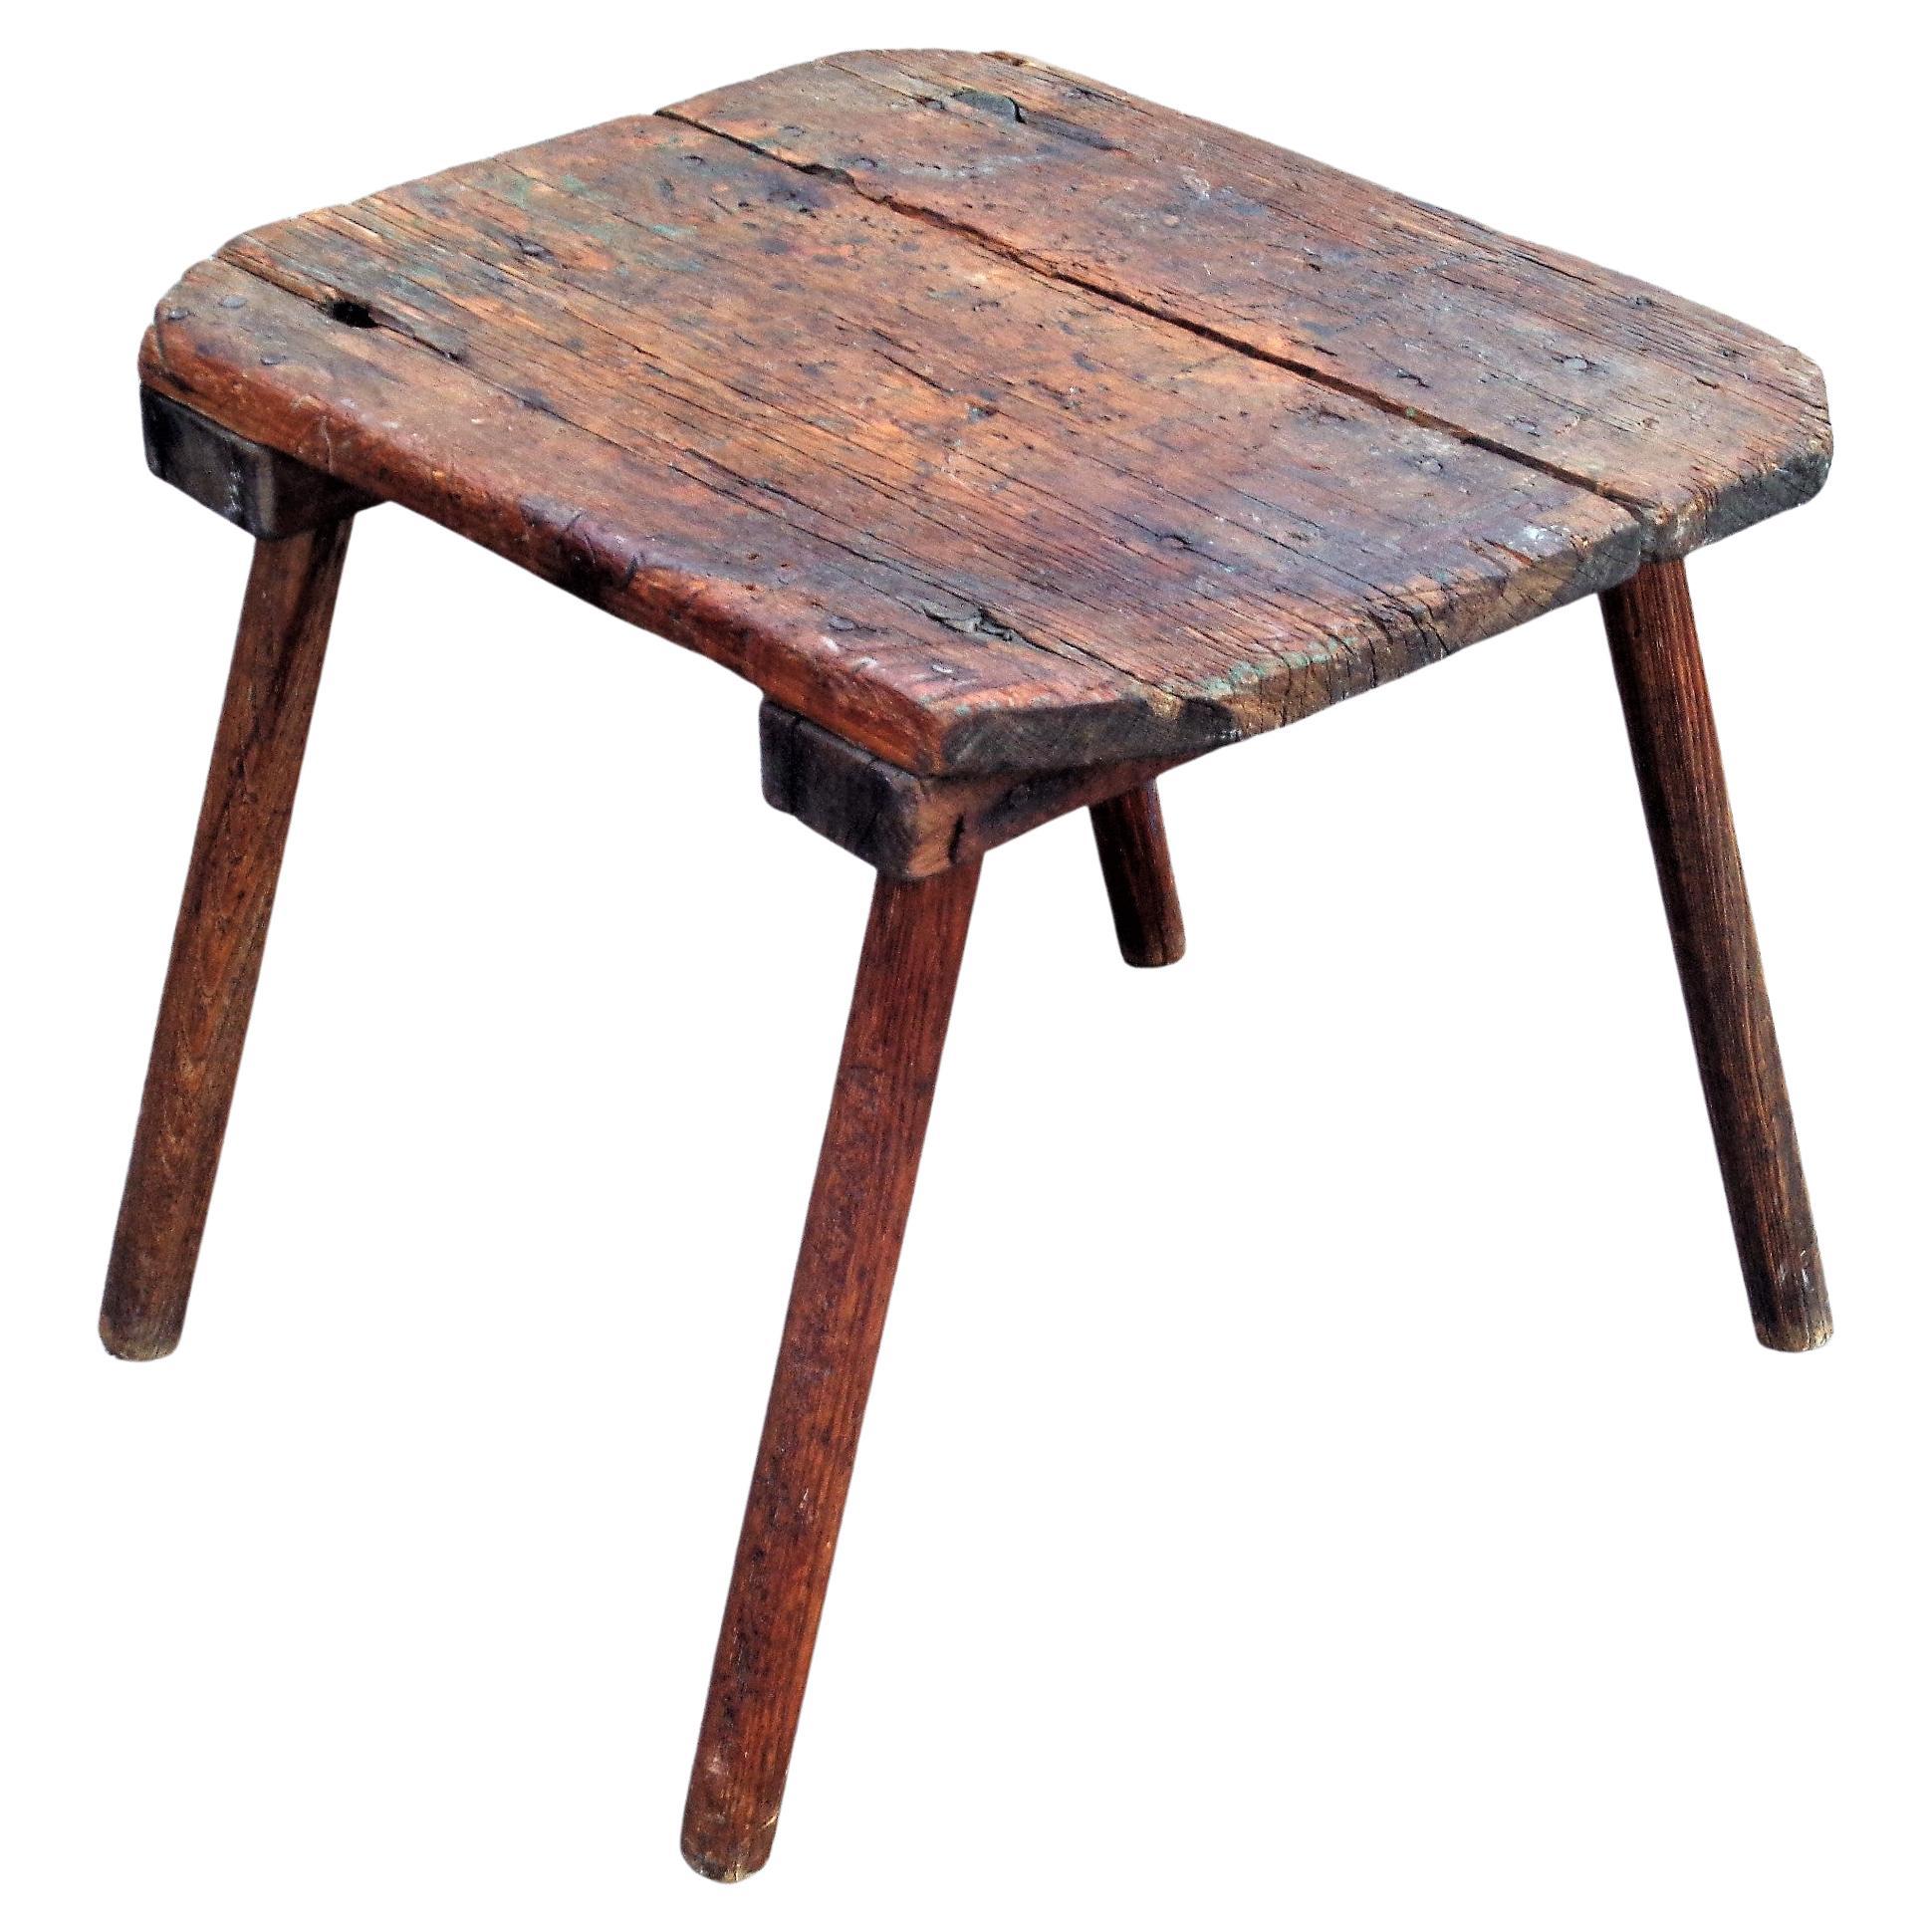 Antique American Primitive Table / Stool, Circa 1900